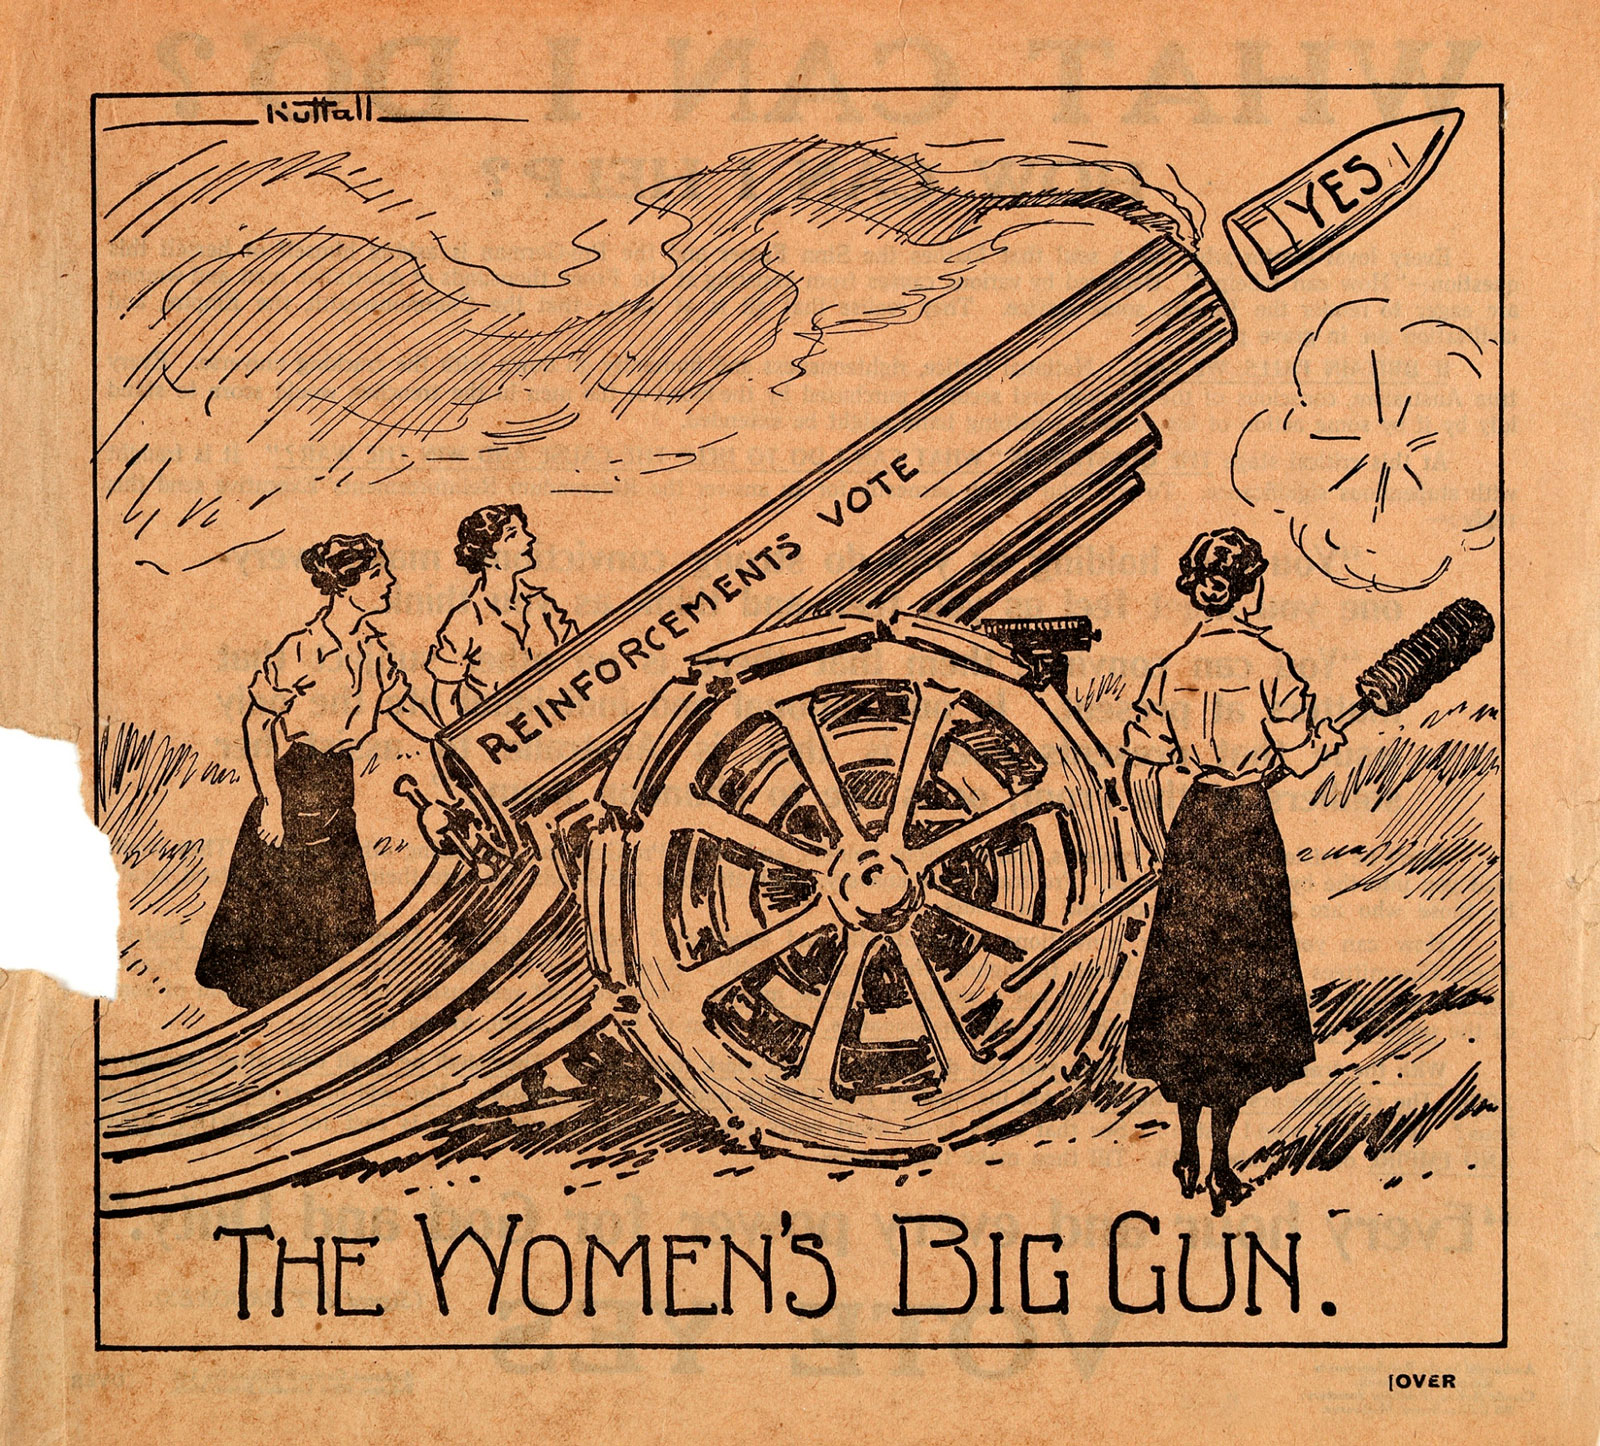 ‘The women’s big gun’ leaflet, 1916 or 1917.